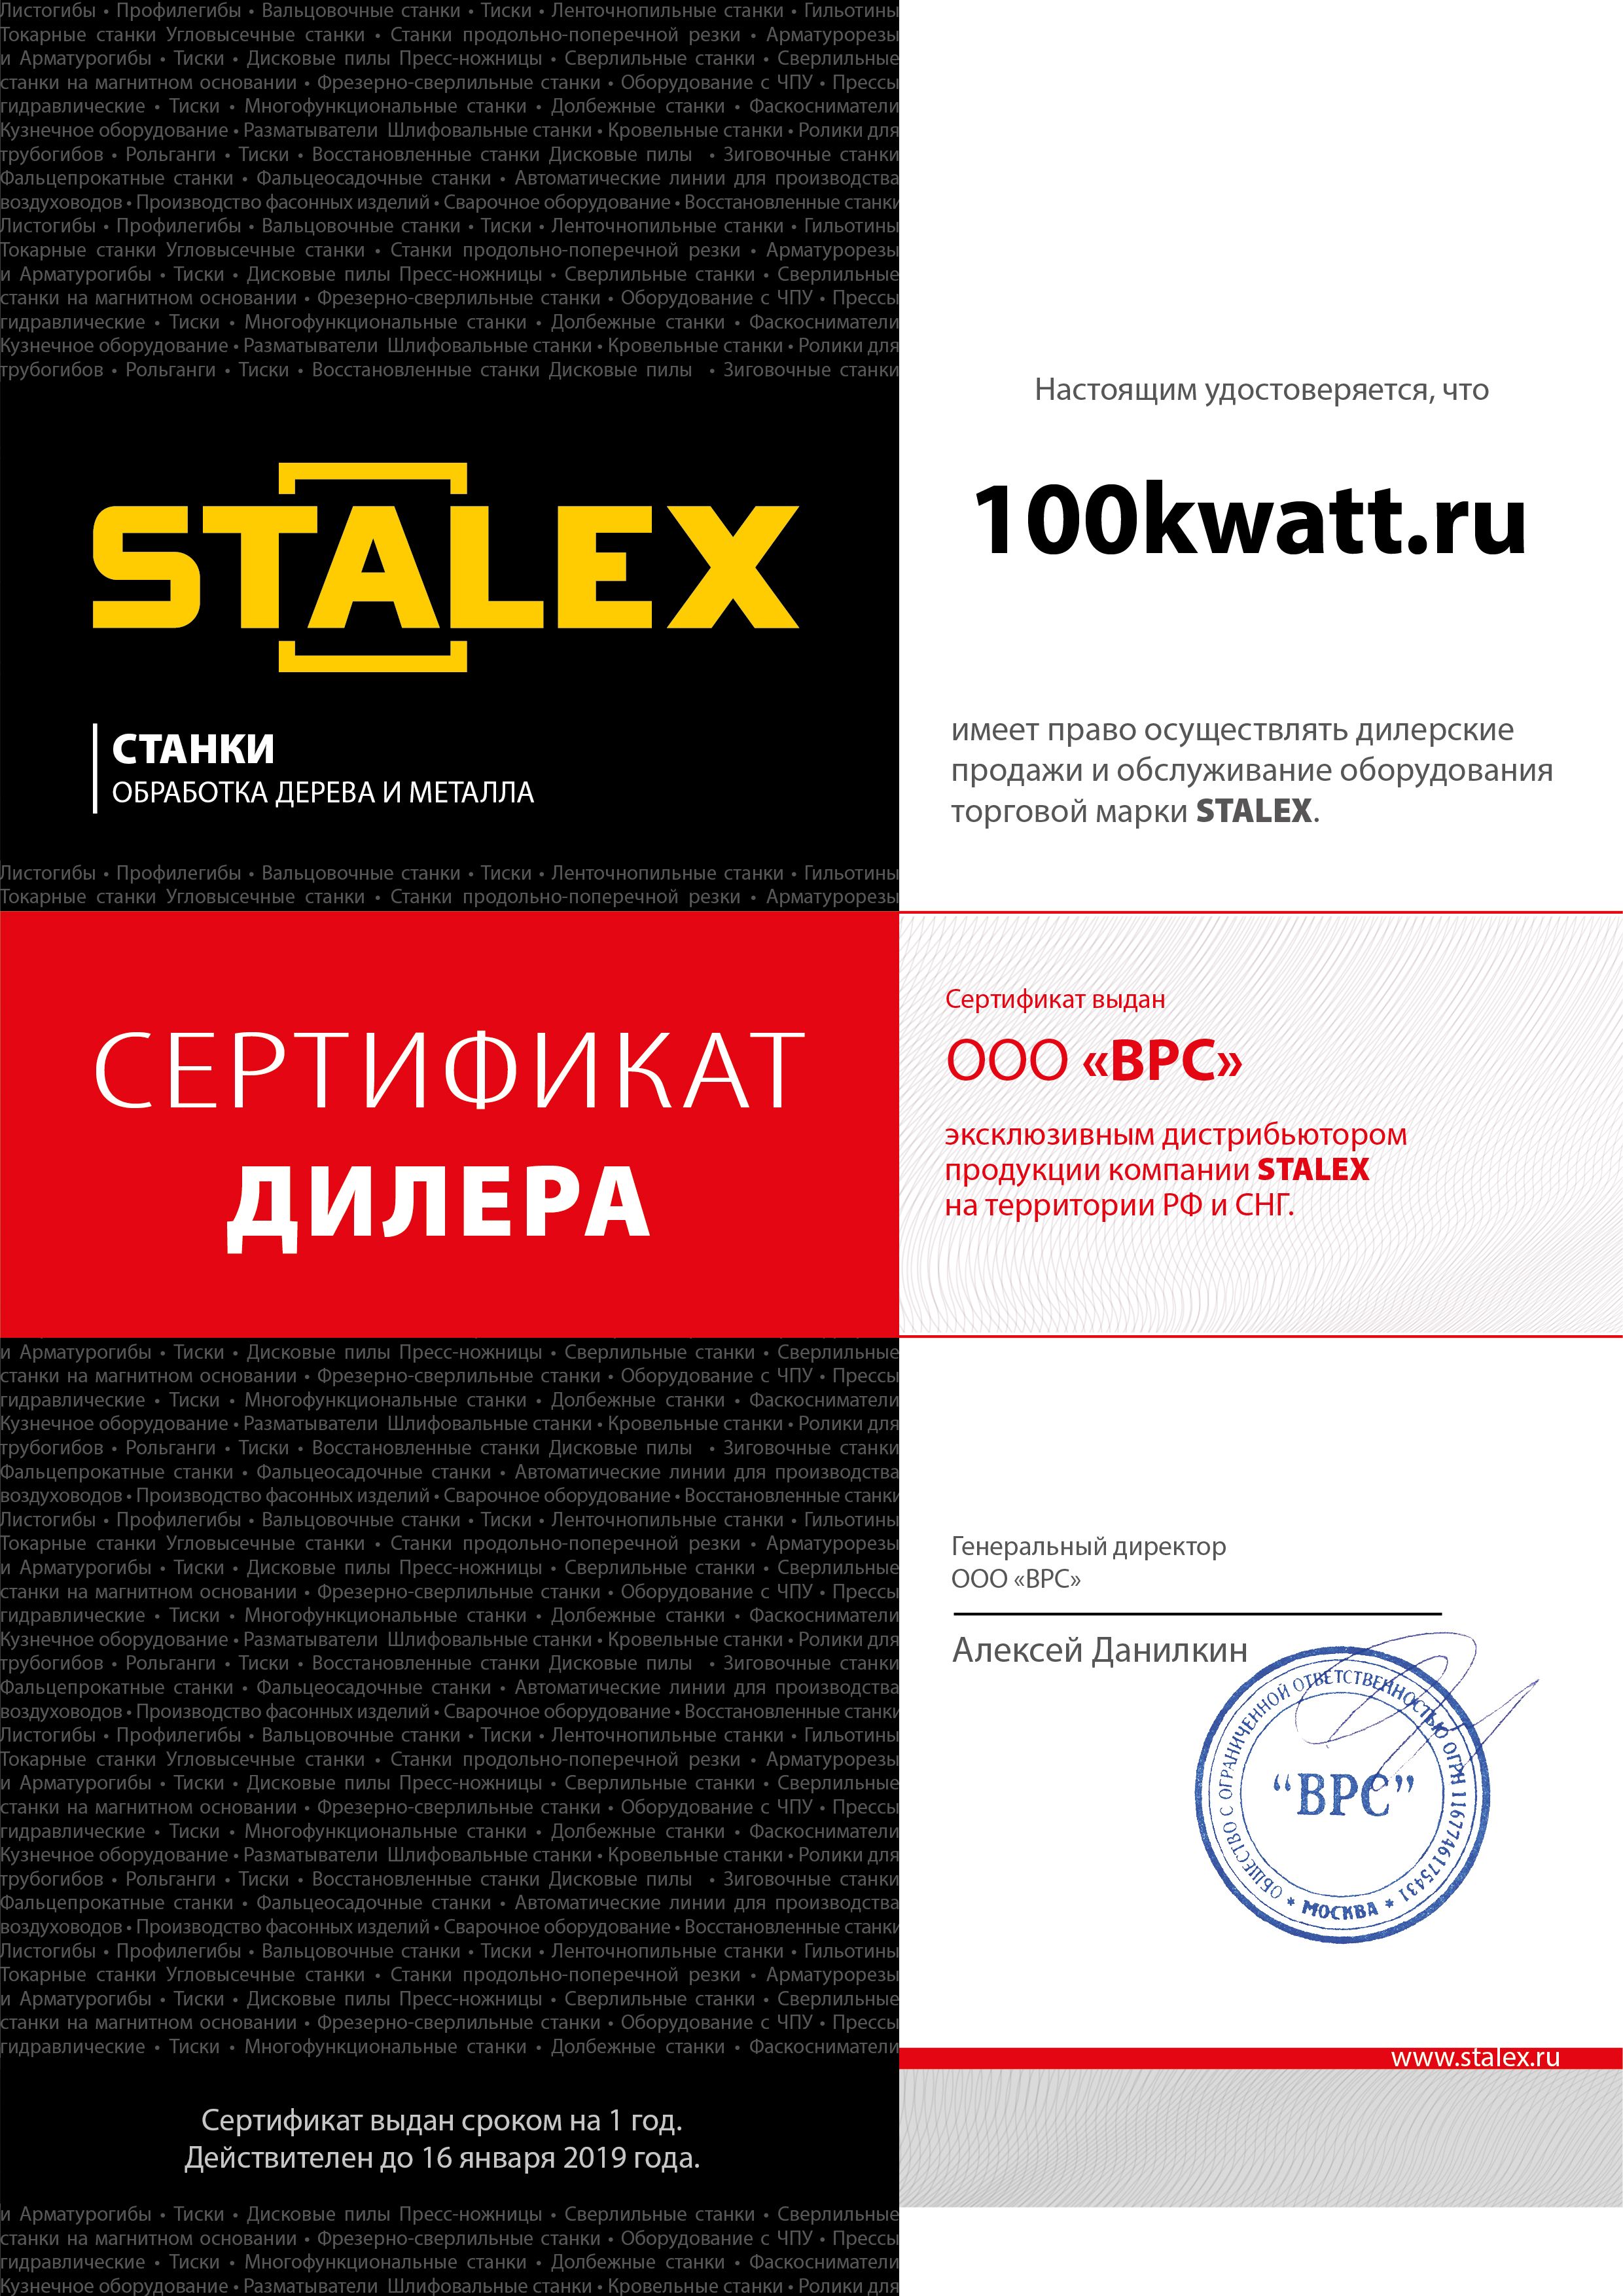 STALEX - Сертификат дилера